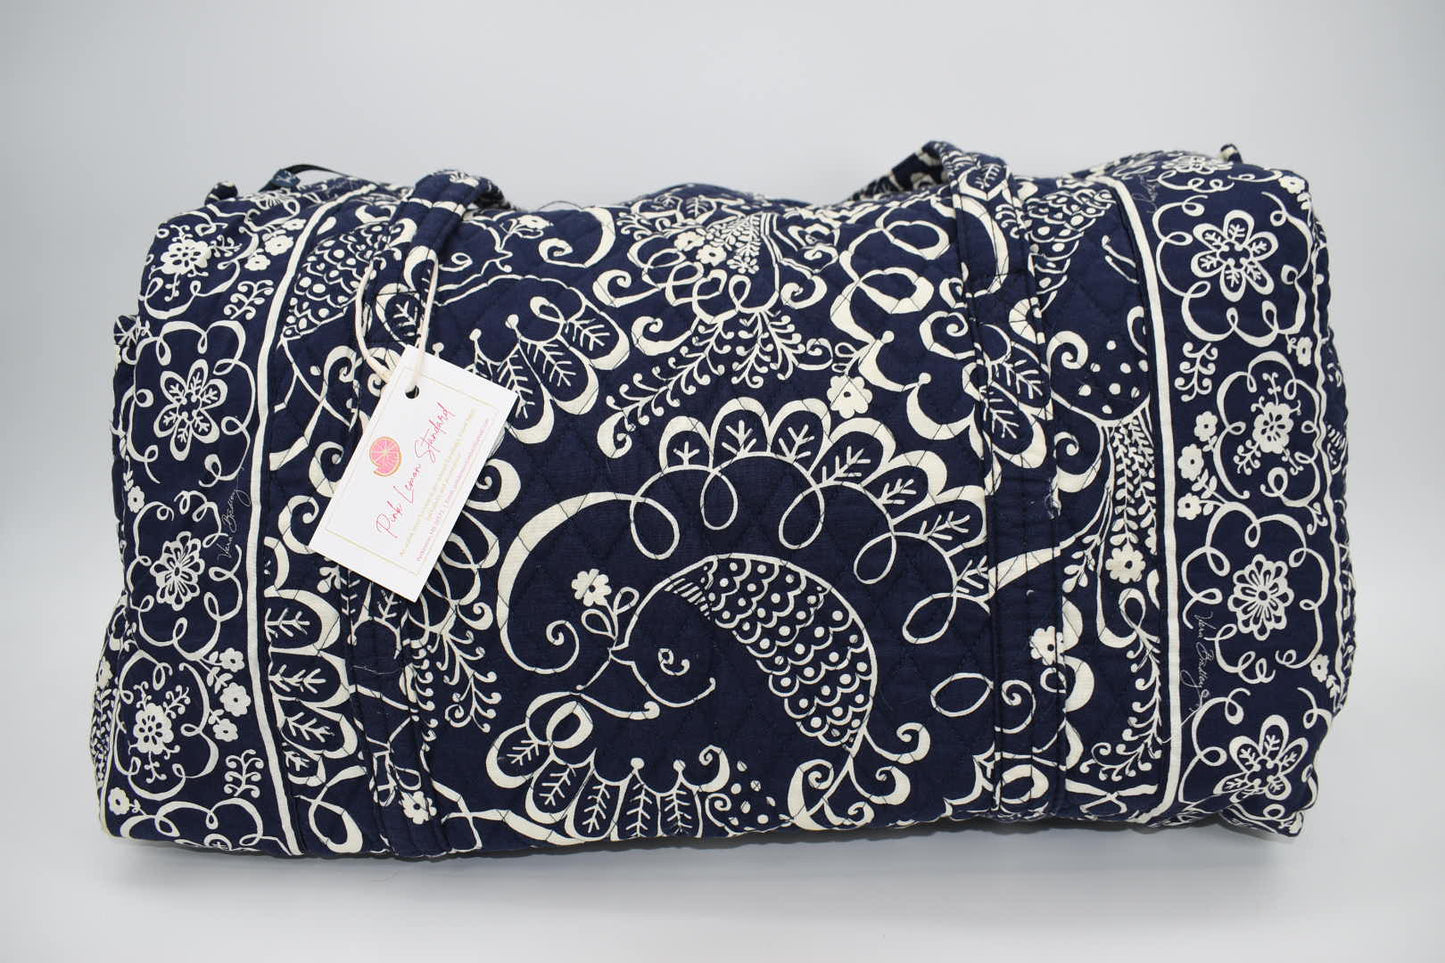 Vera Bradley Large Duffel Bag in "Twirly Birds Navy" Pattern